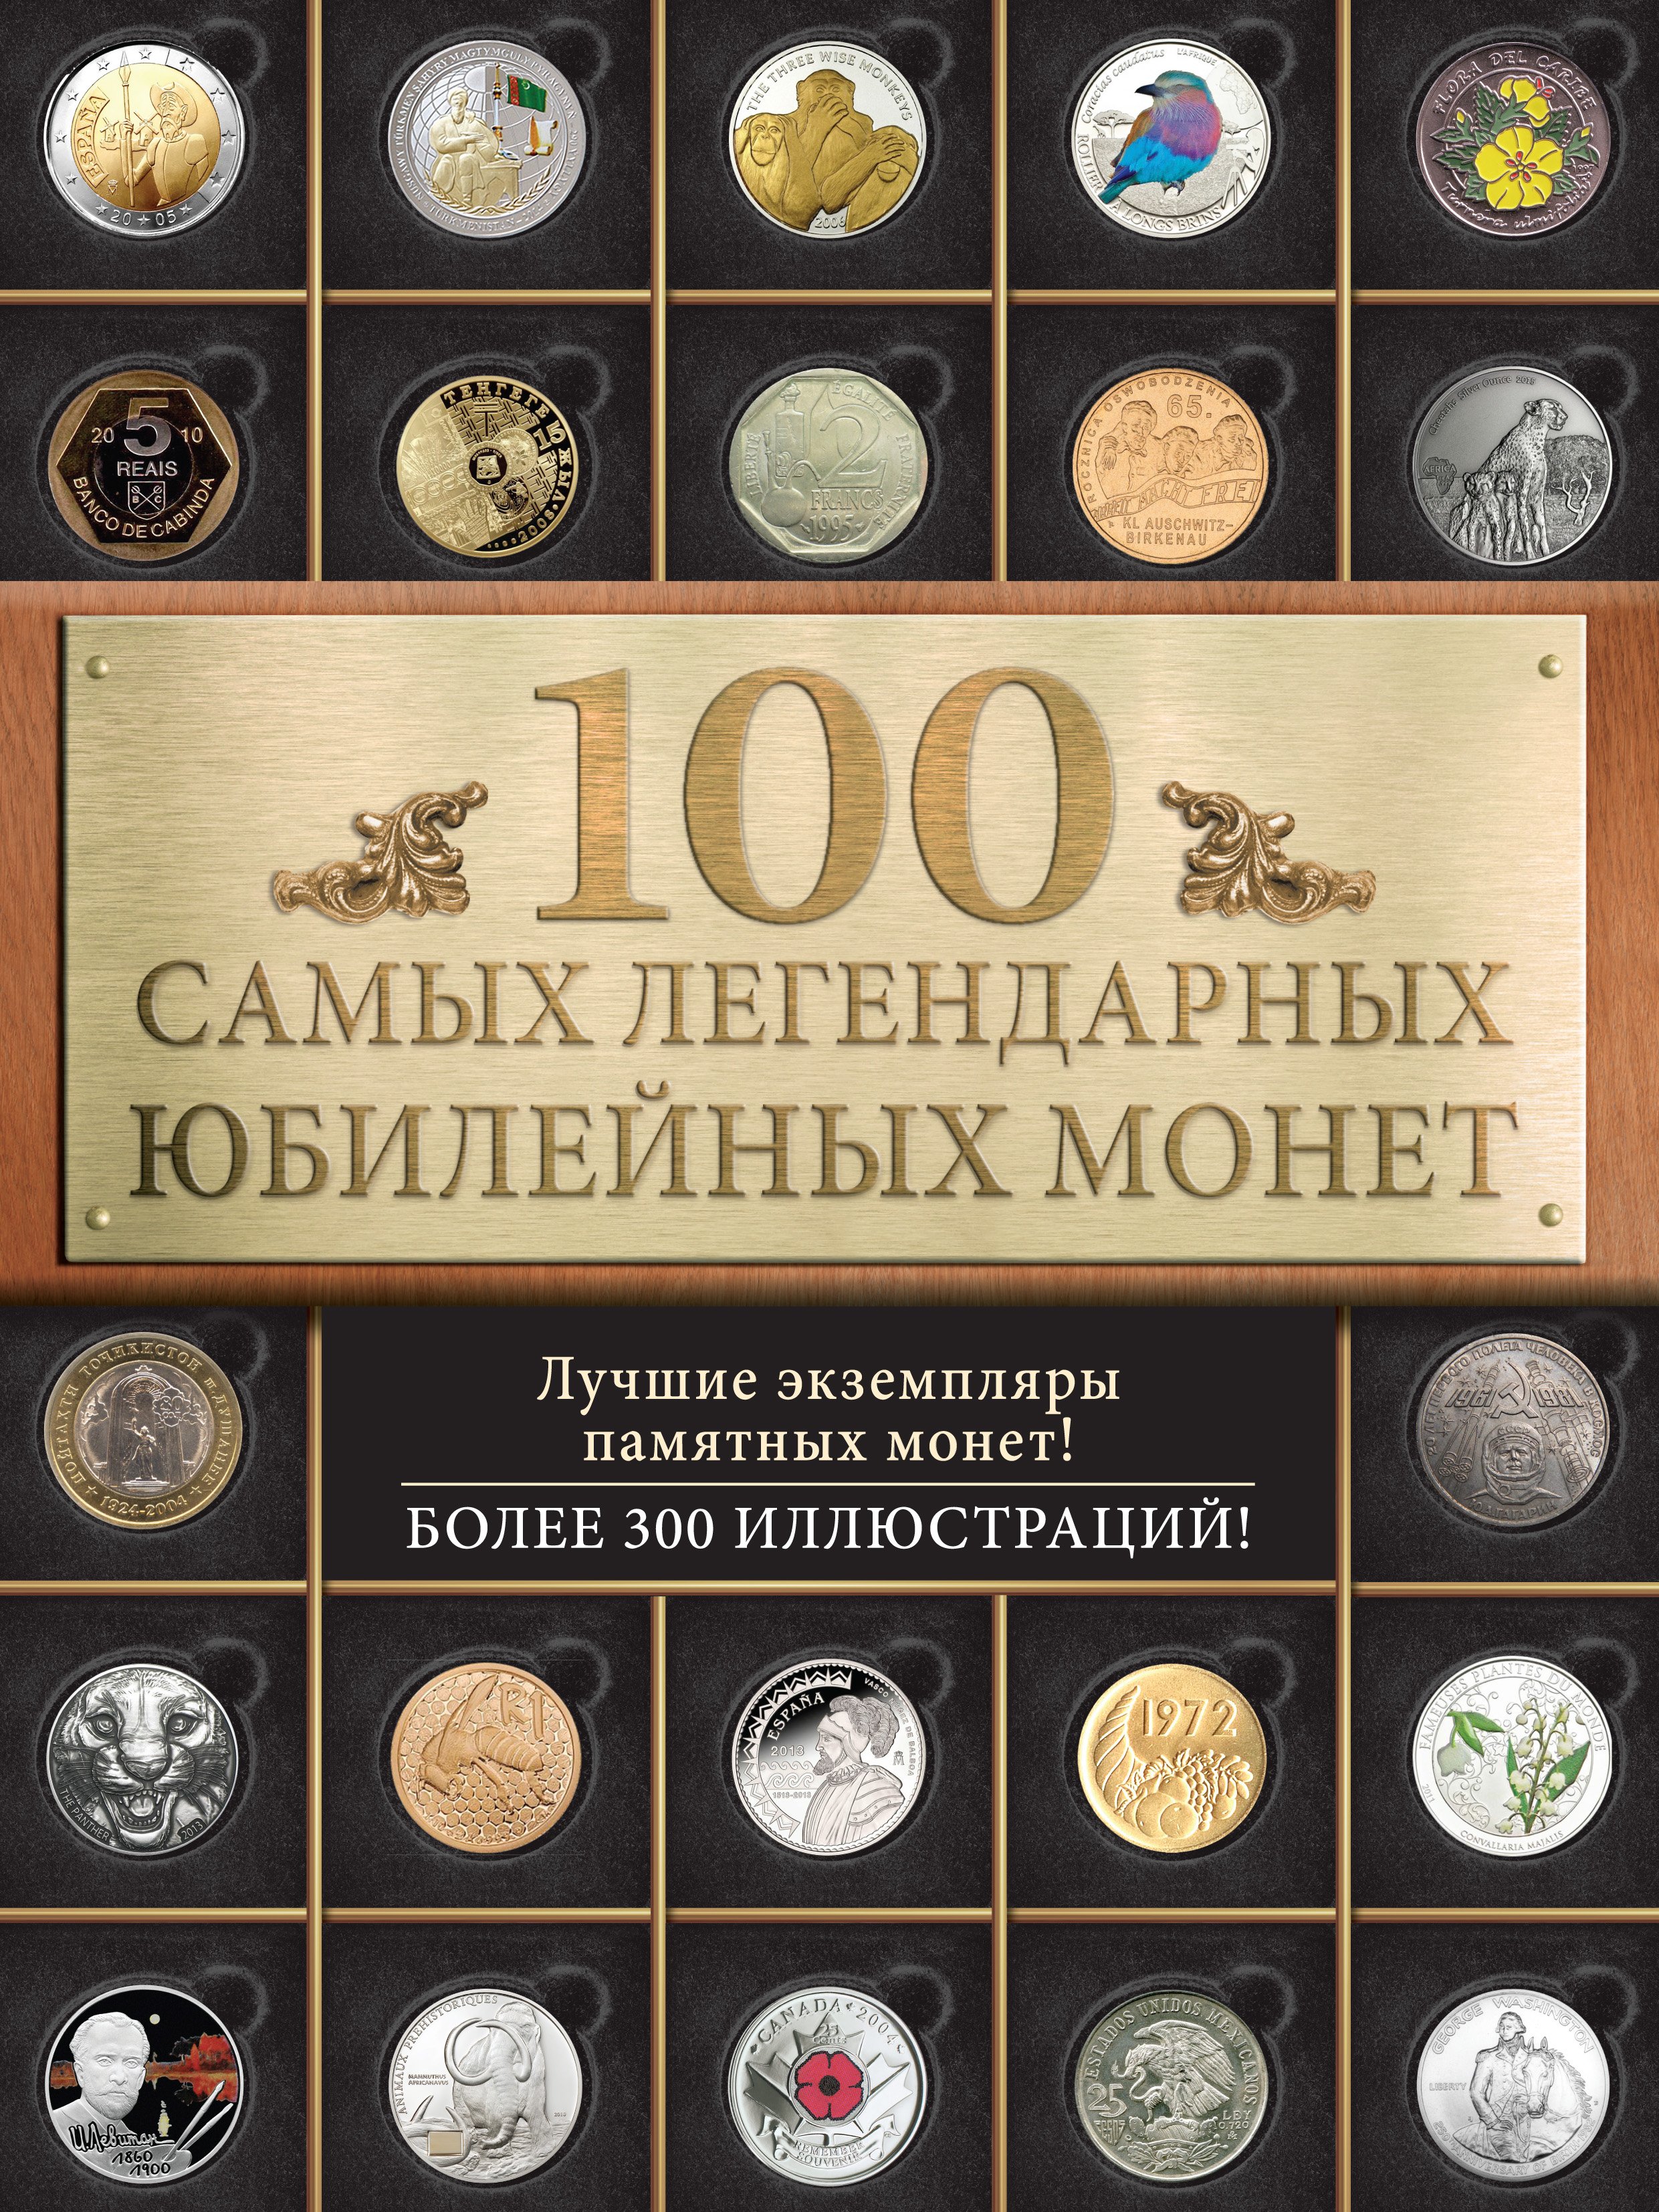 100самых легендарных юбилейных монет